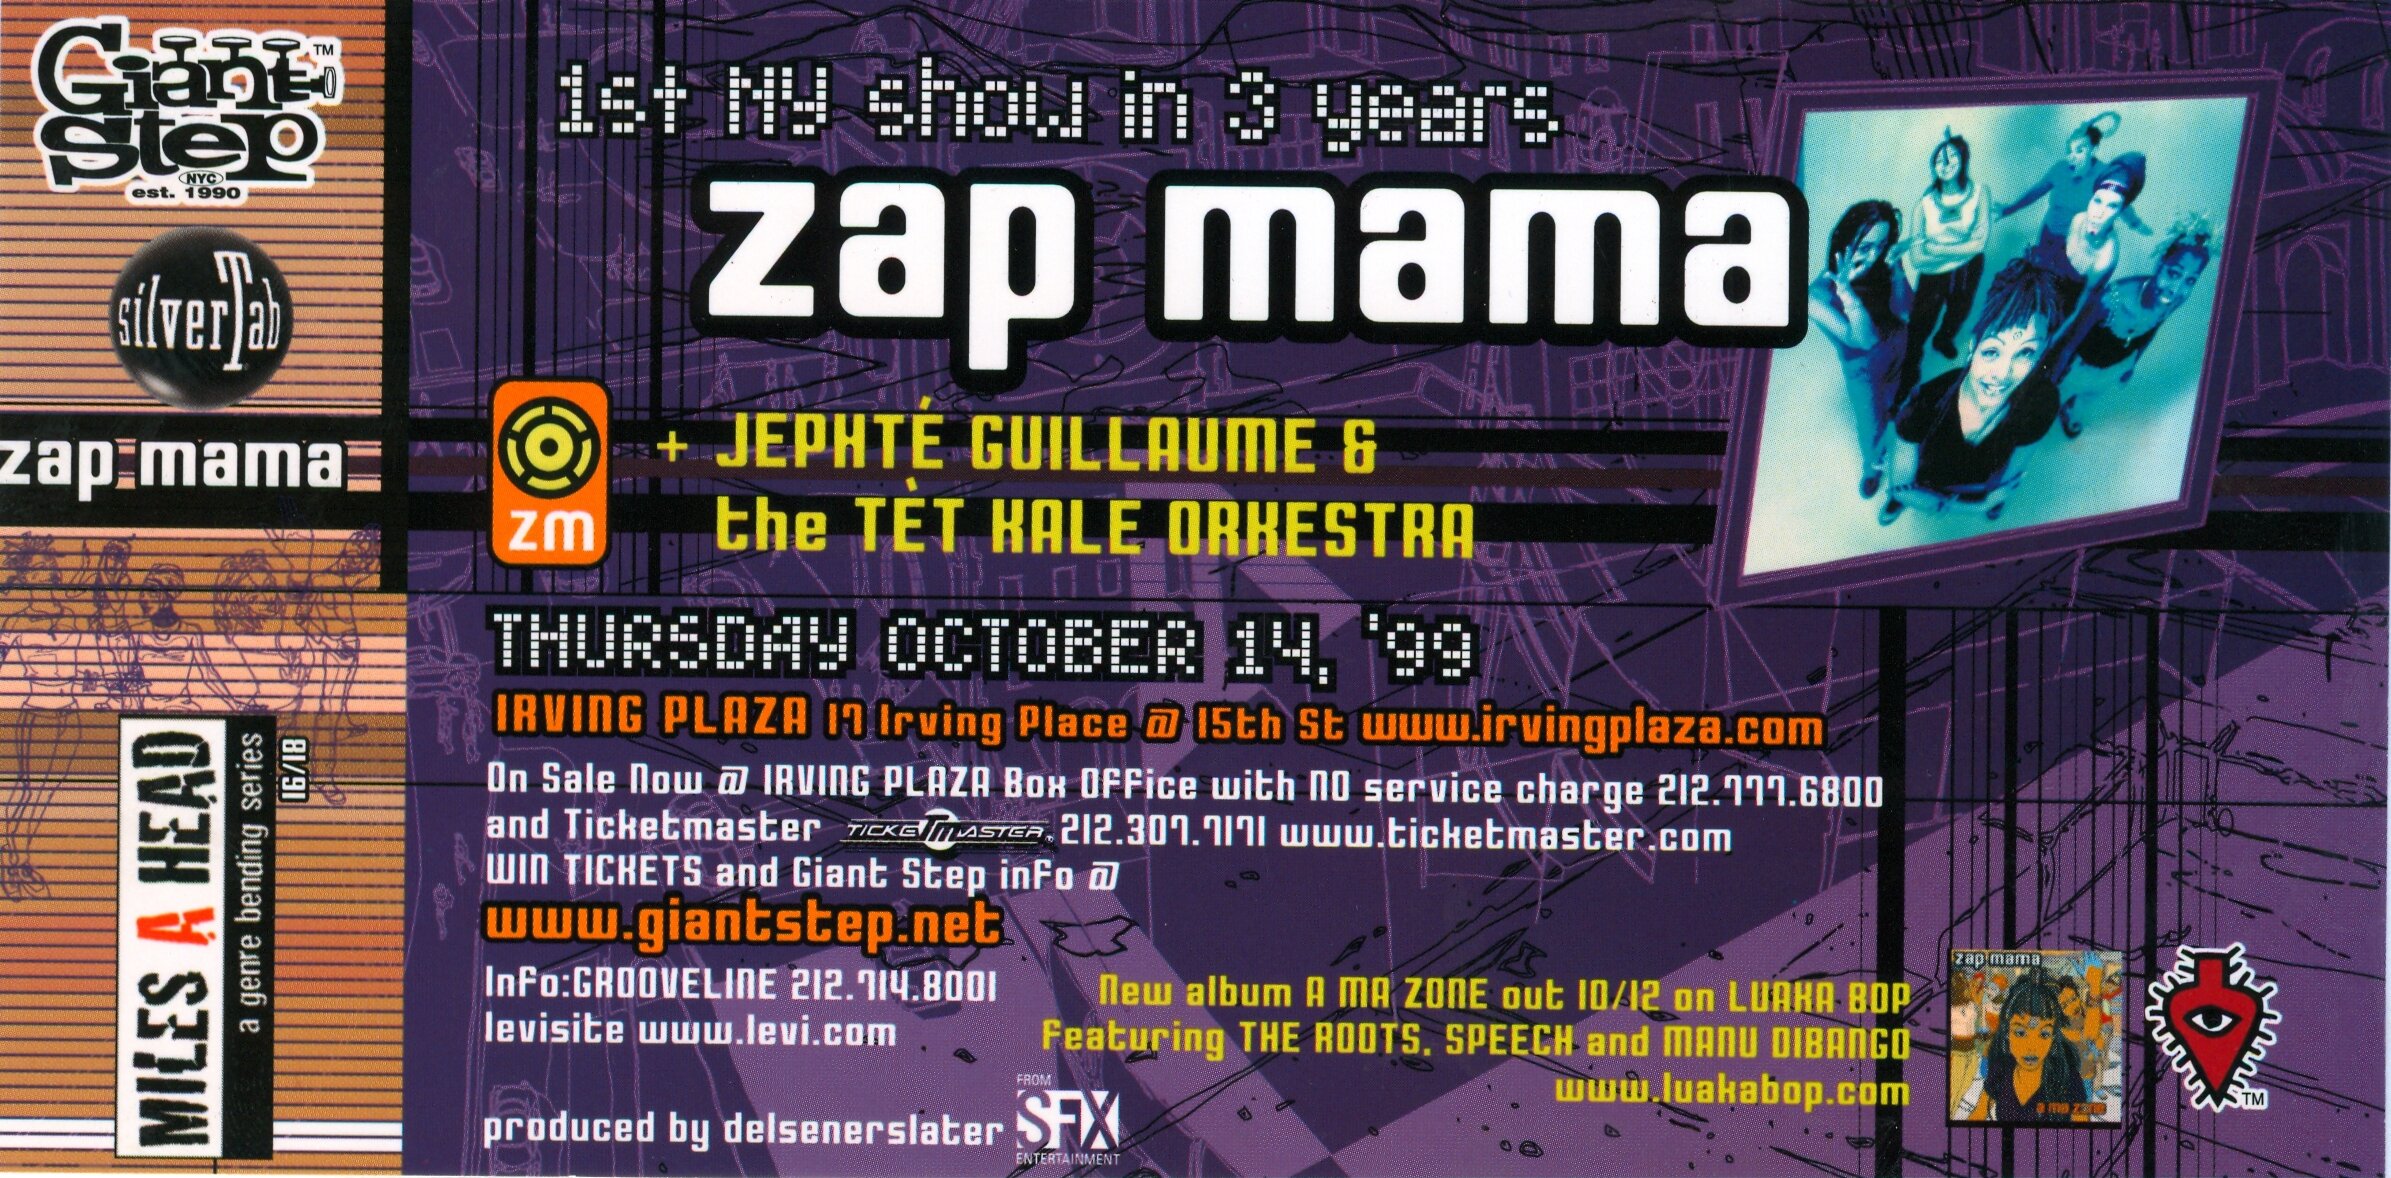 10-14-99 Zap Mama2.jpg